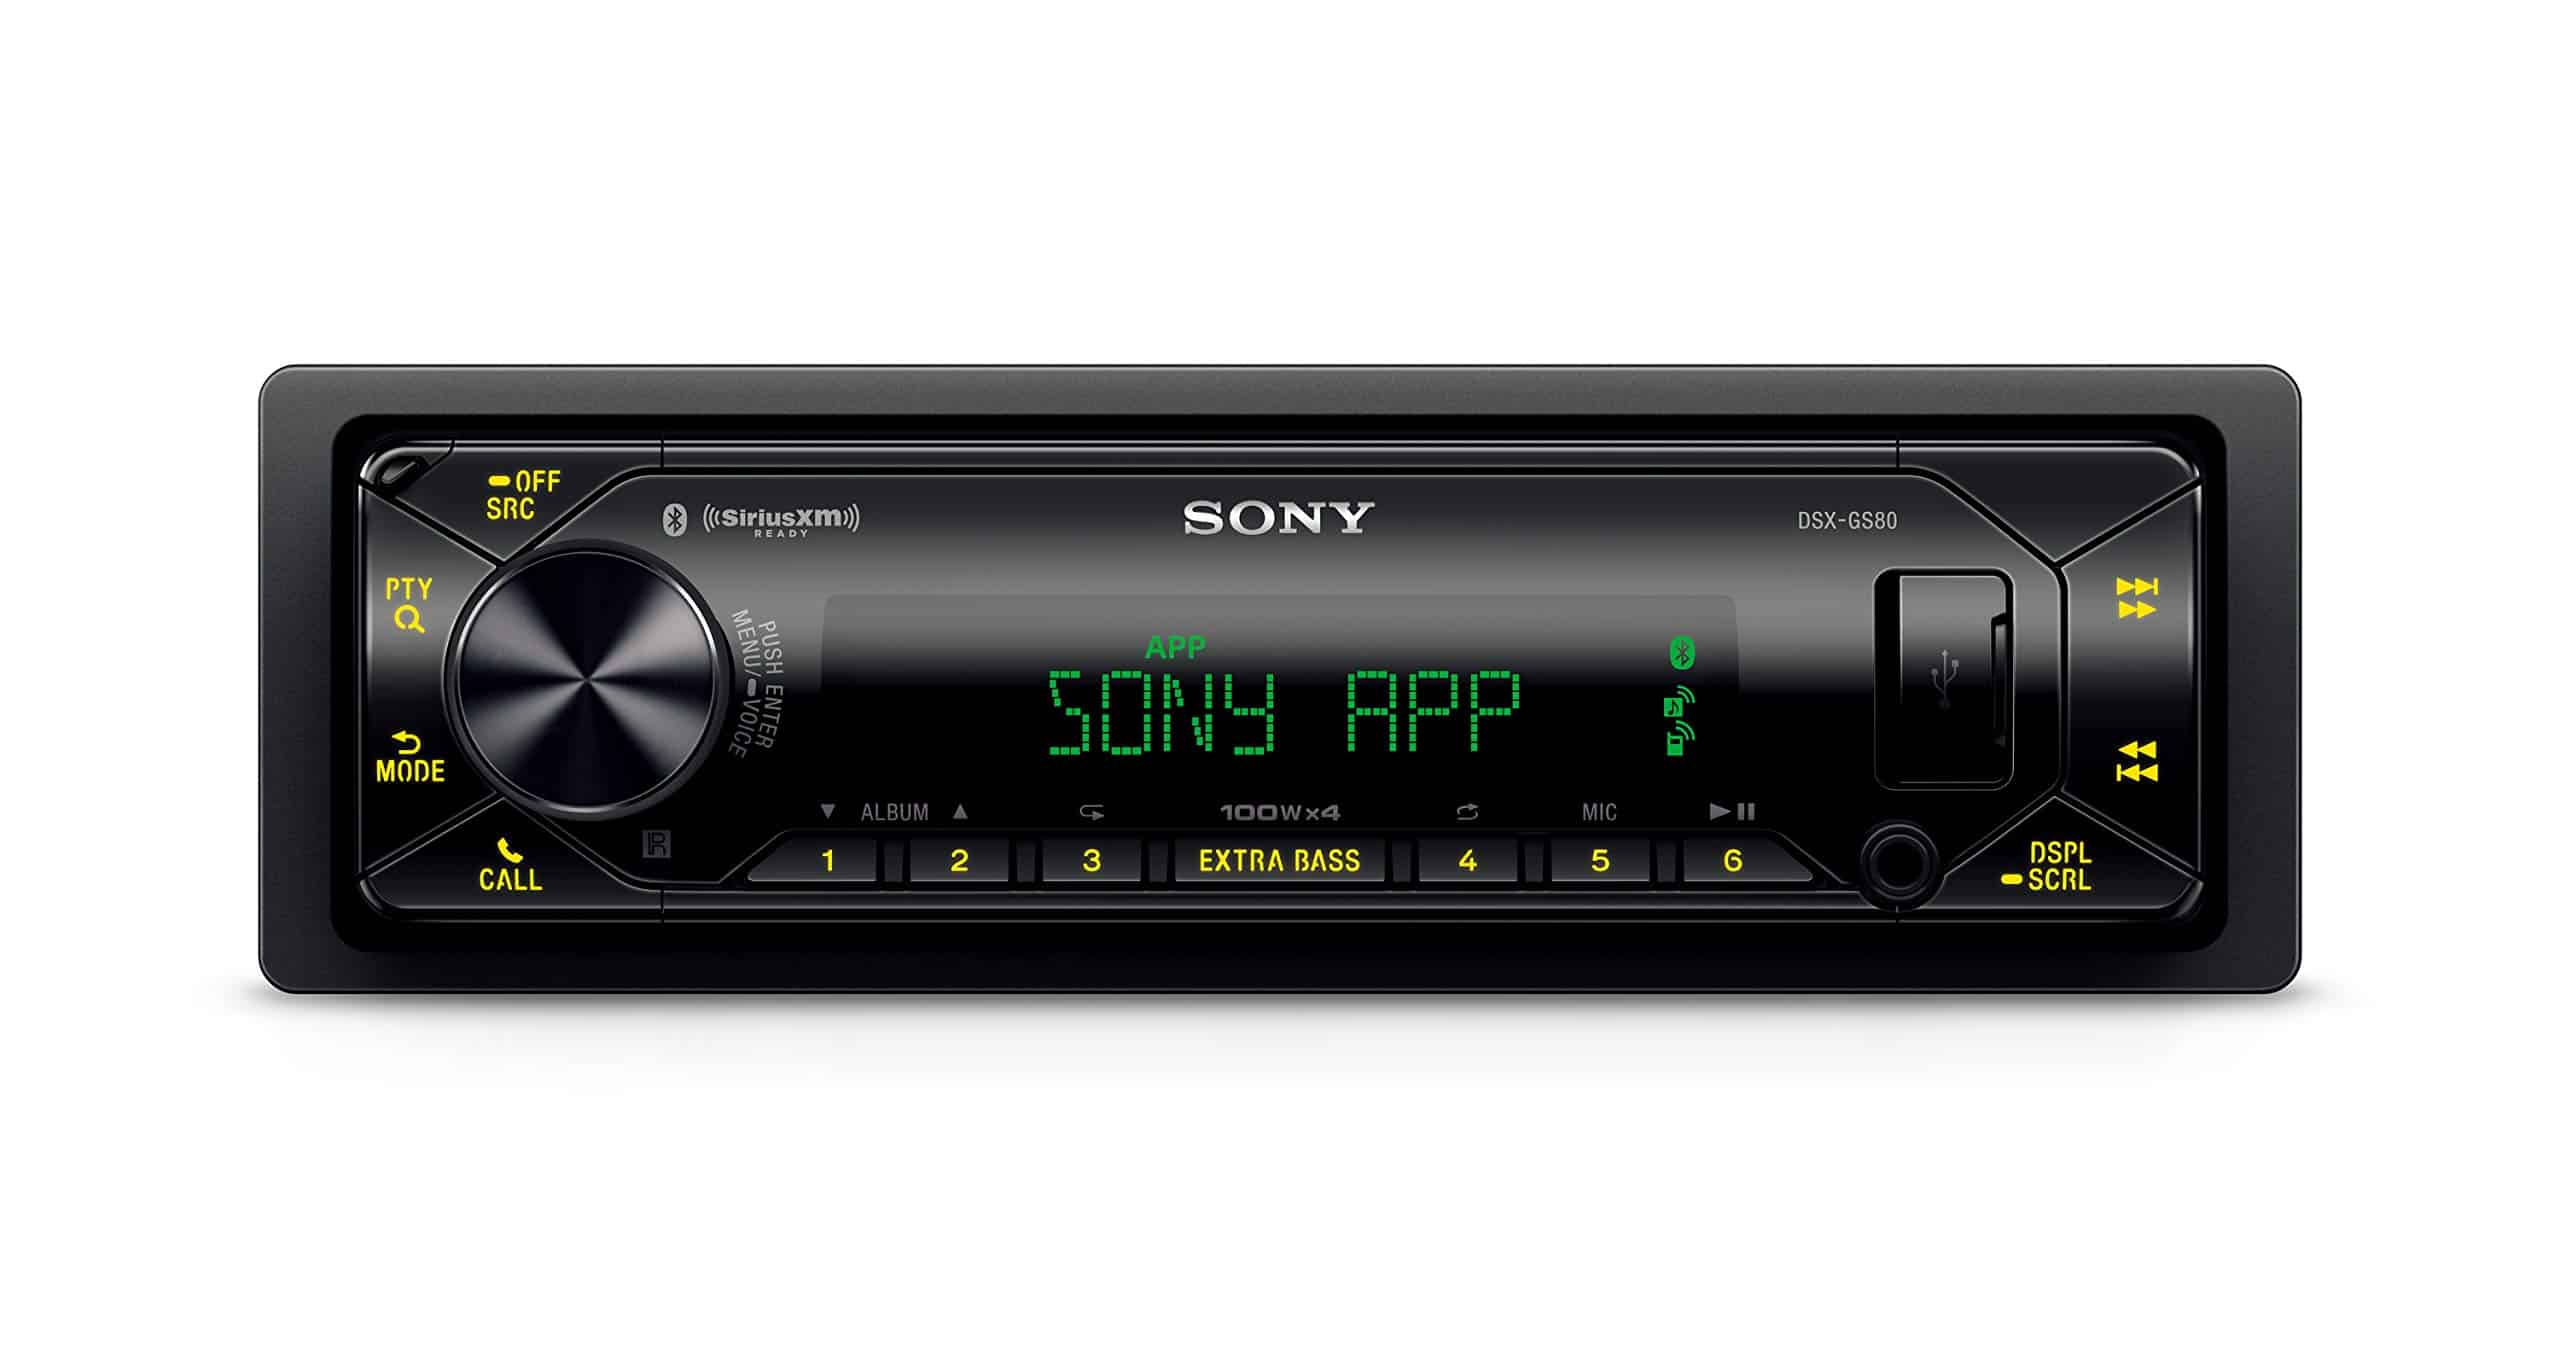 Sony GS80 Media Receiver